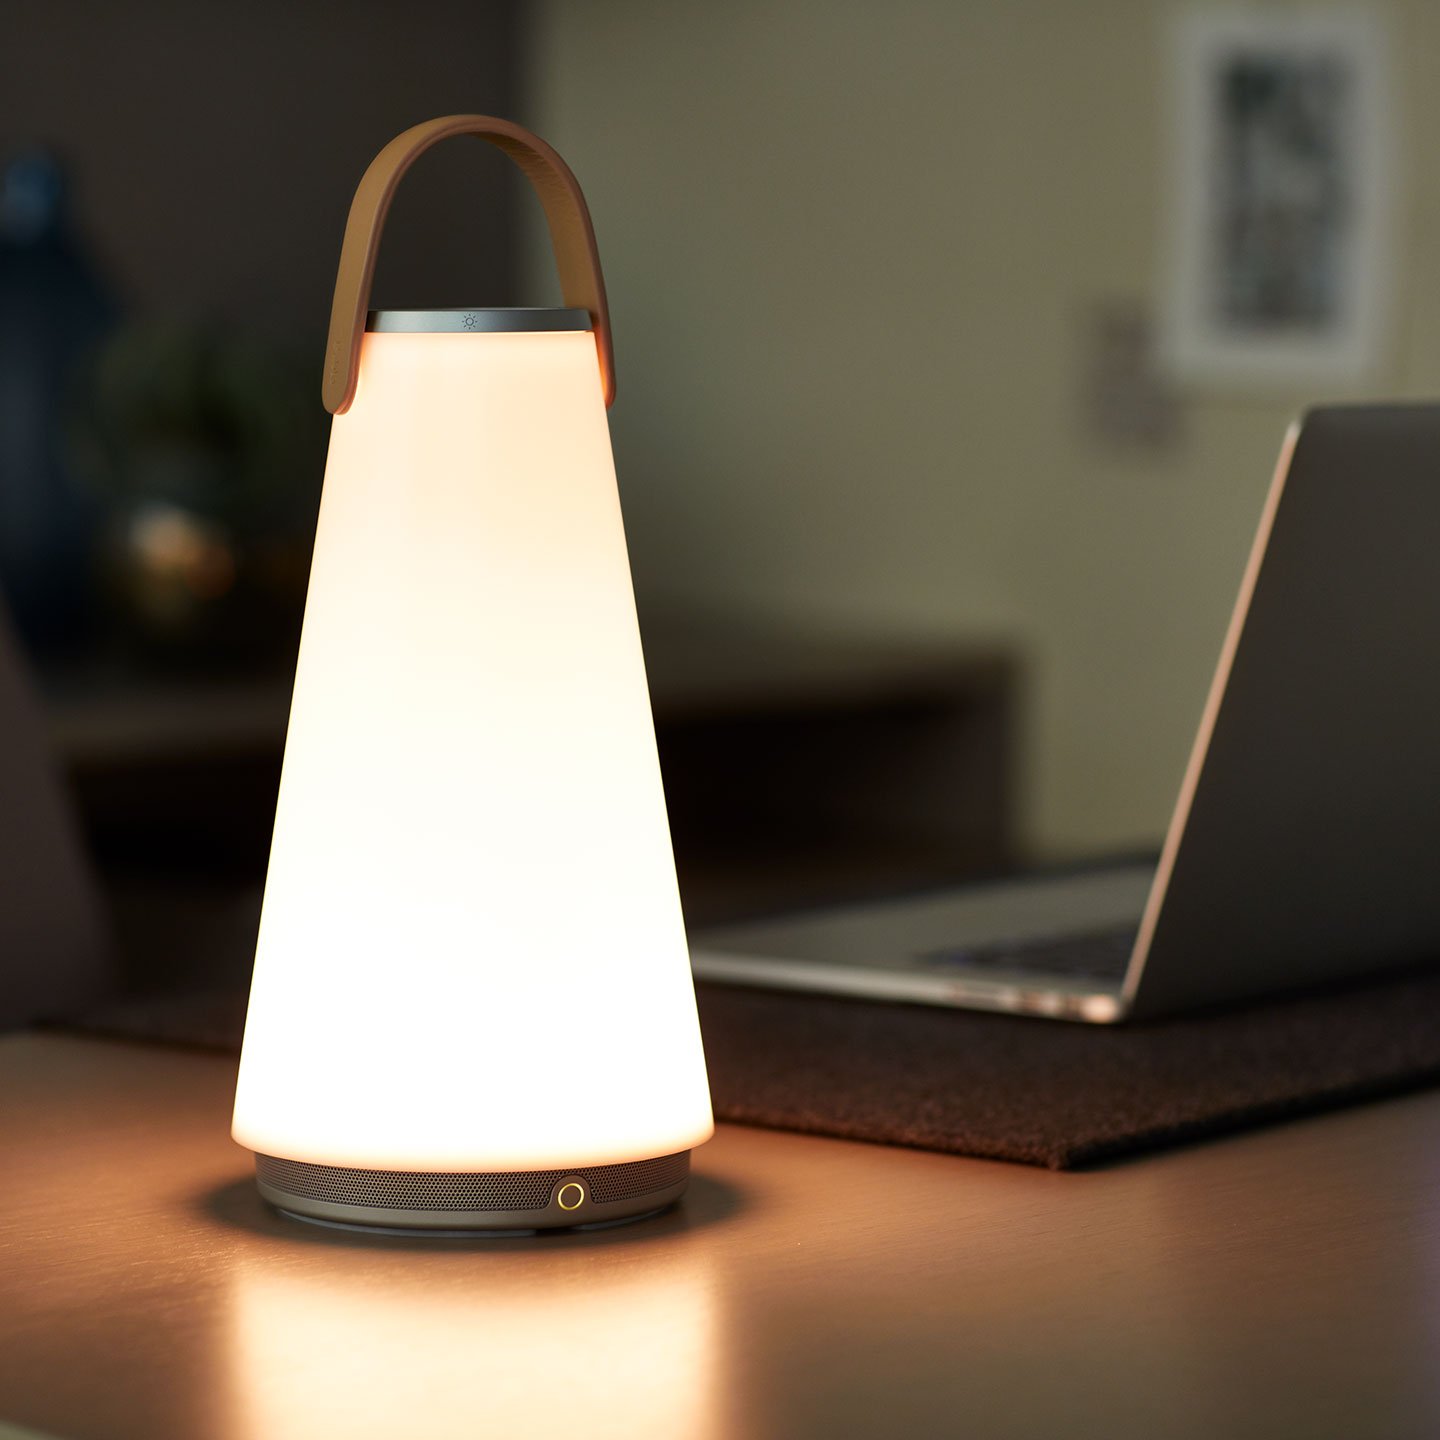 Haworth Uma Lighting with wood handle on office table next to laptop